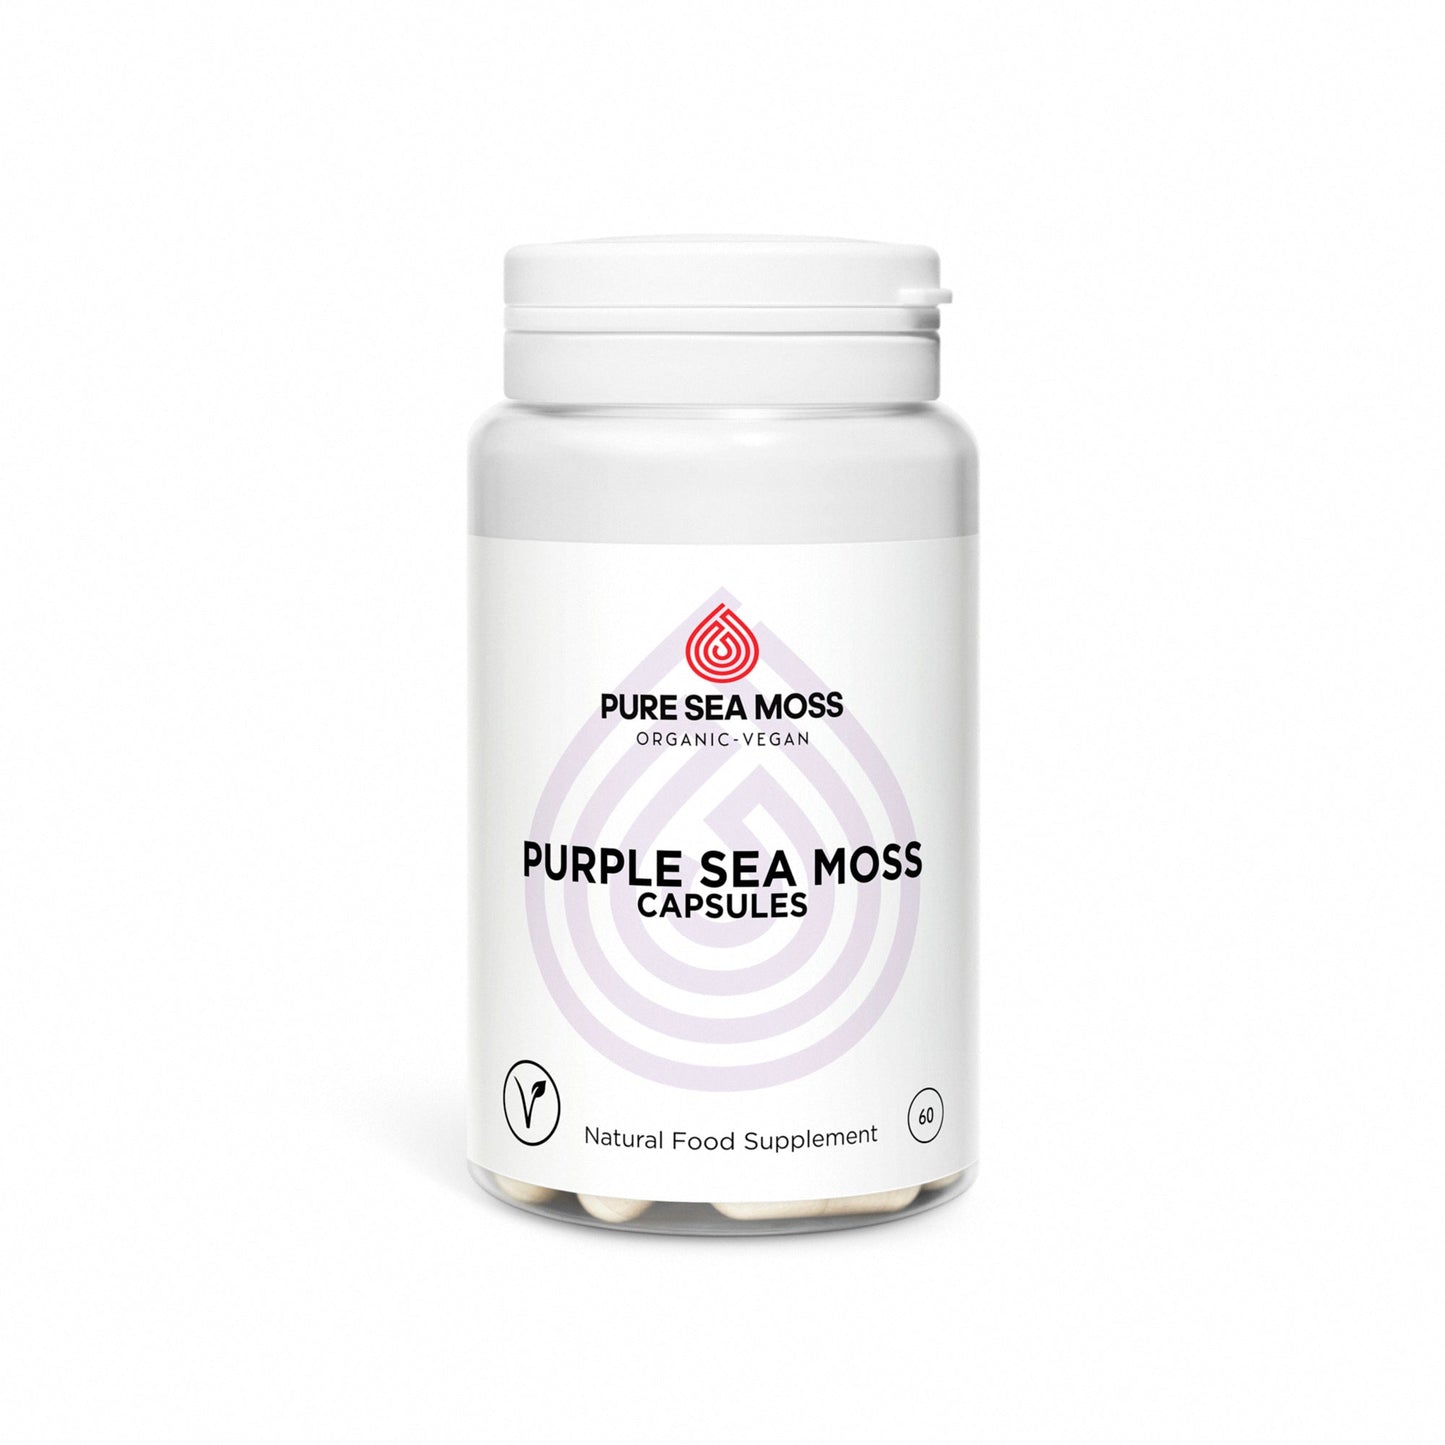 Purple Sea Moss Capsules by pureseamossuk